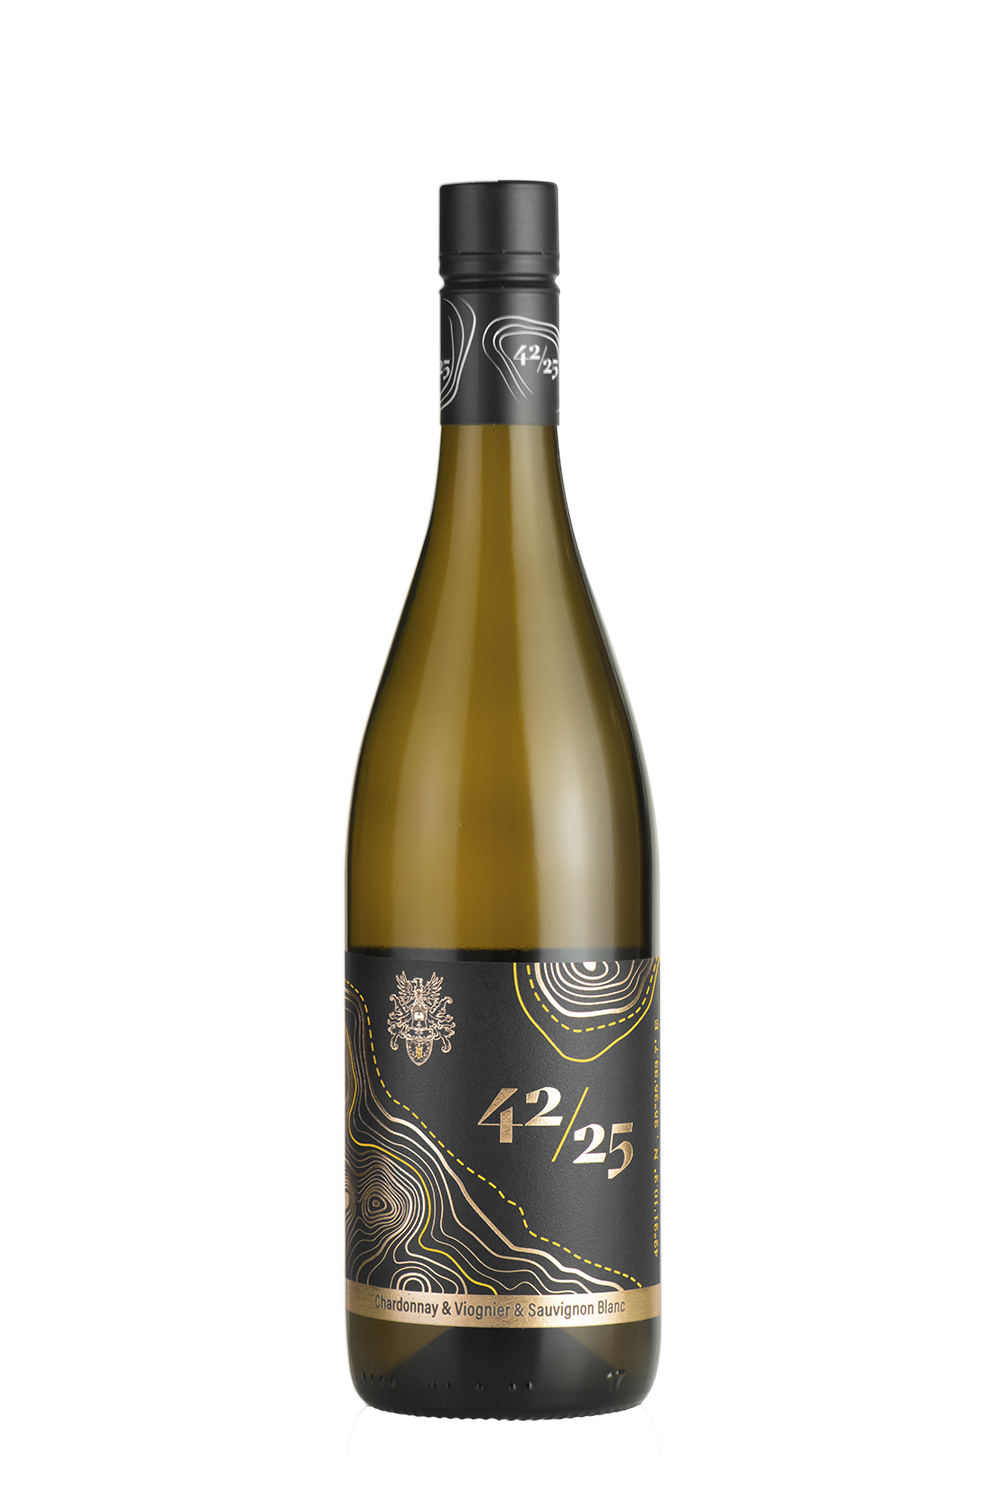 42/25 Chardonnay & Viognier &Sauvignon Blanc